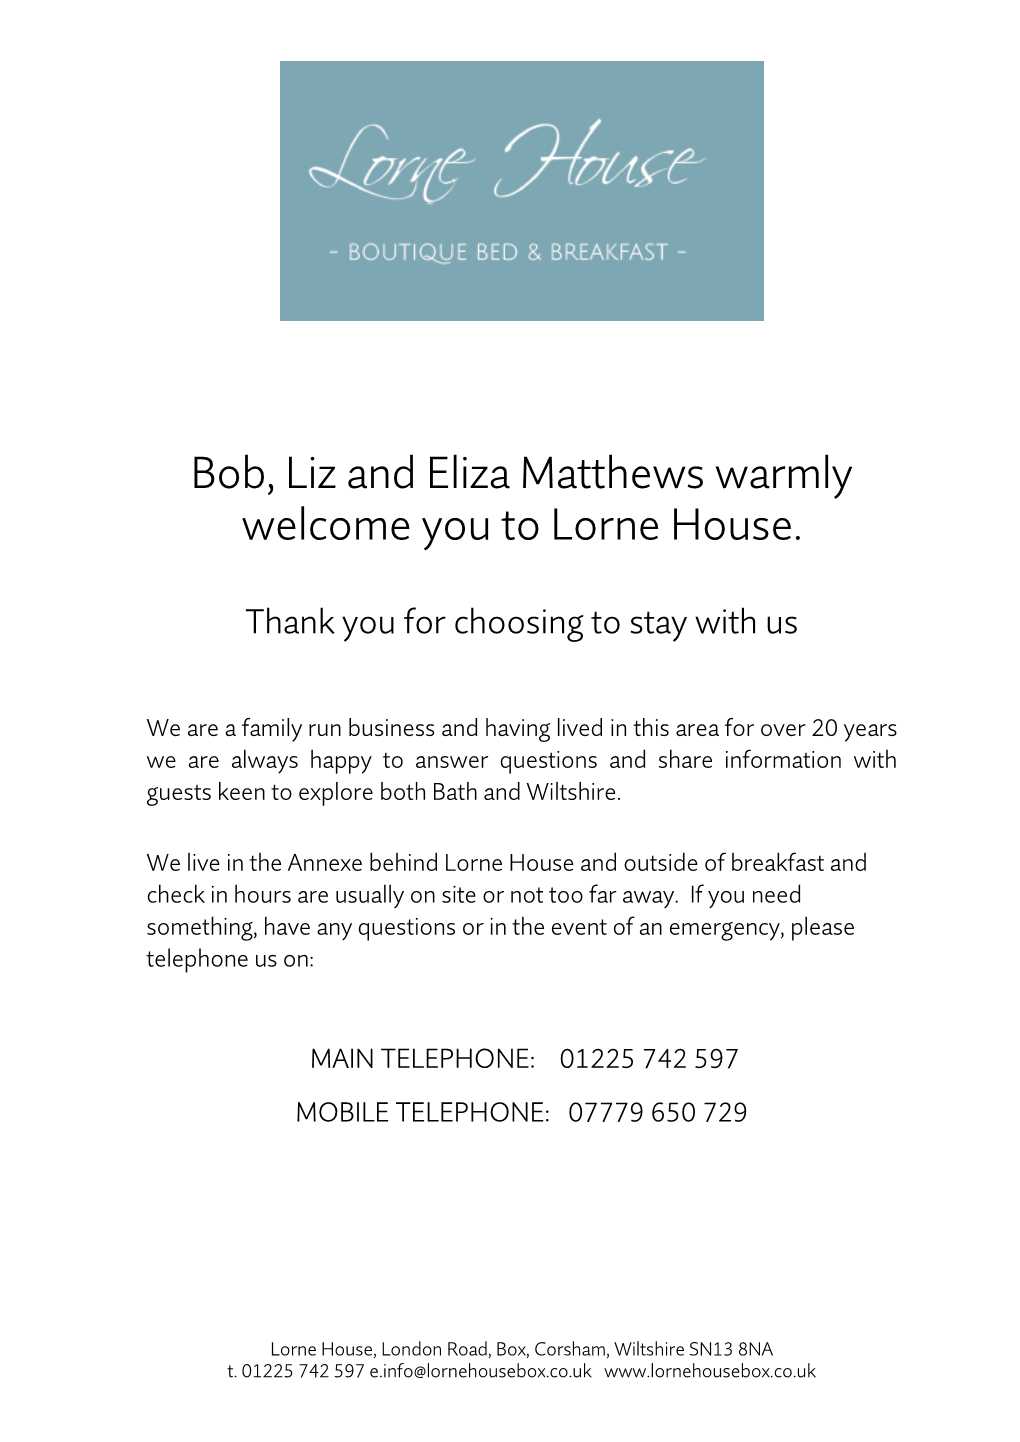 Bob, Liz and Eliza Matthews Warmly Welcome You to Lorne House